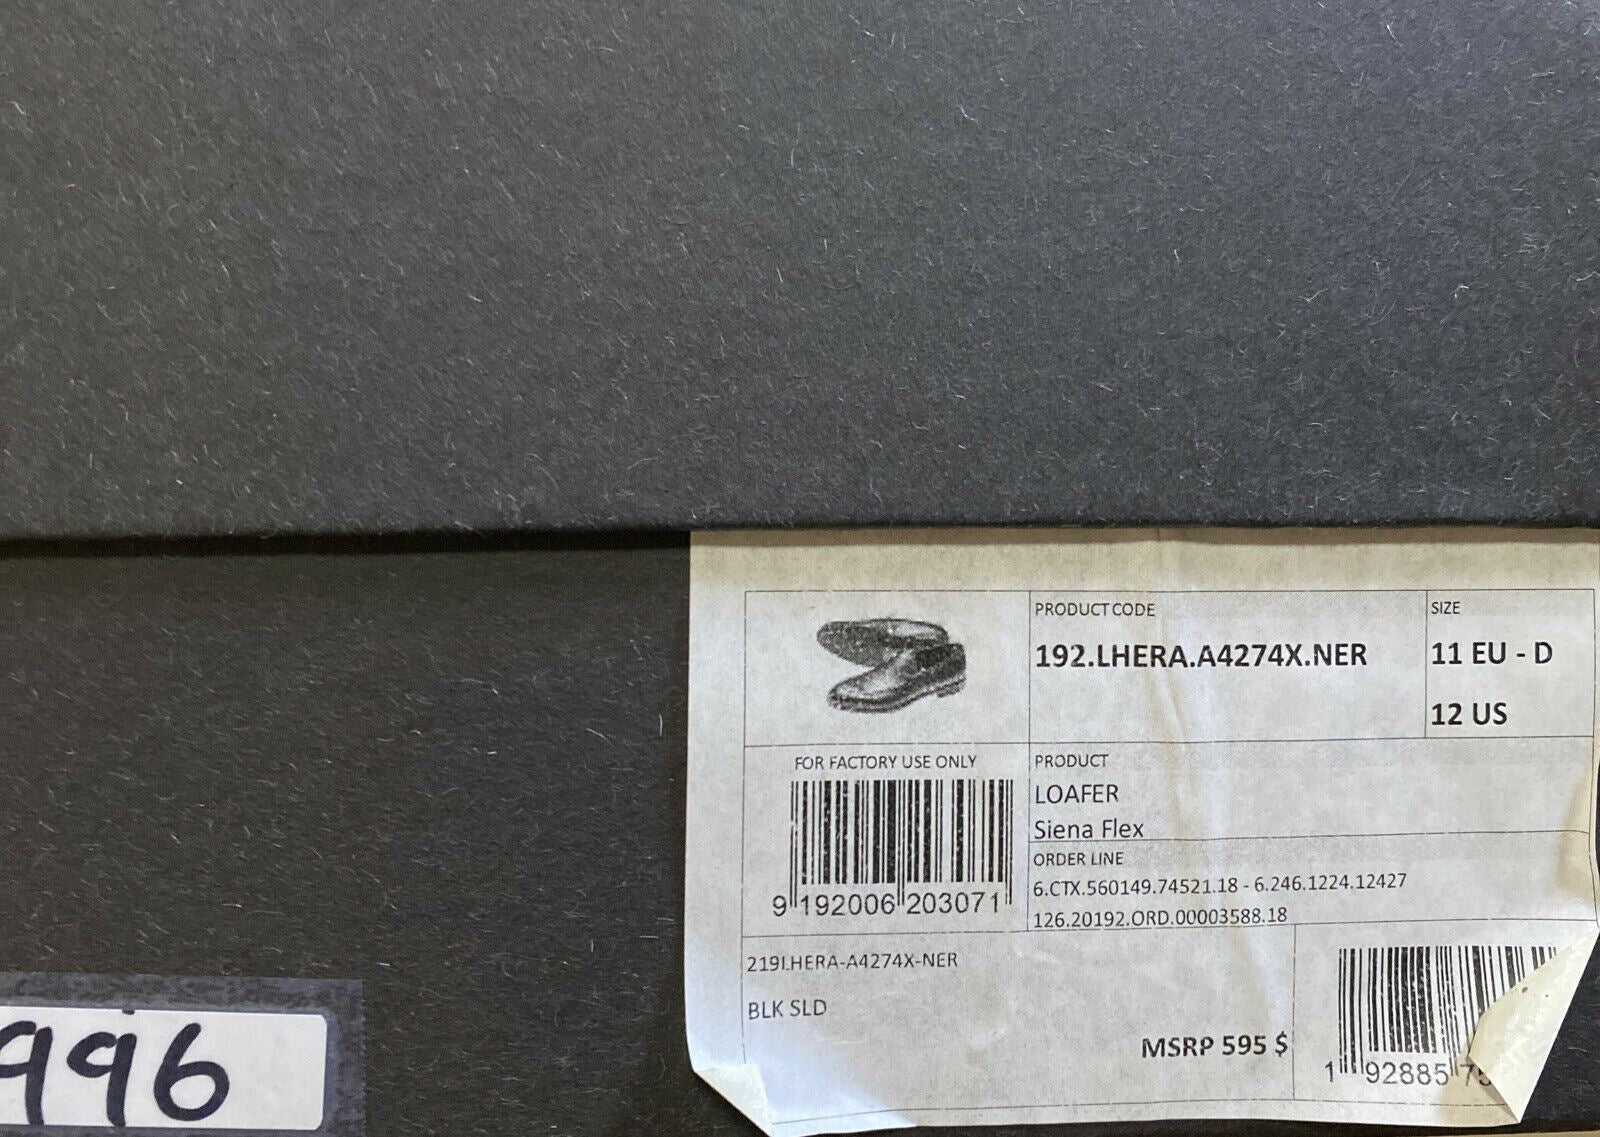 New $595 Ermenegildo Zegna  Leather Loafers Shoes Black 12 US Italy